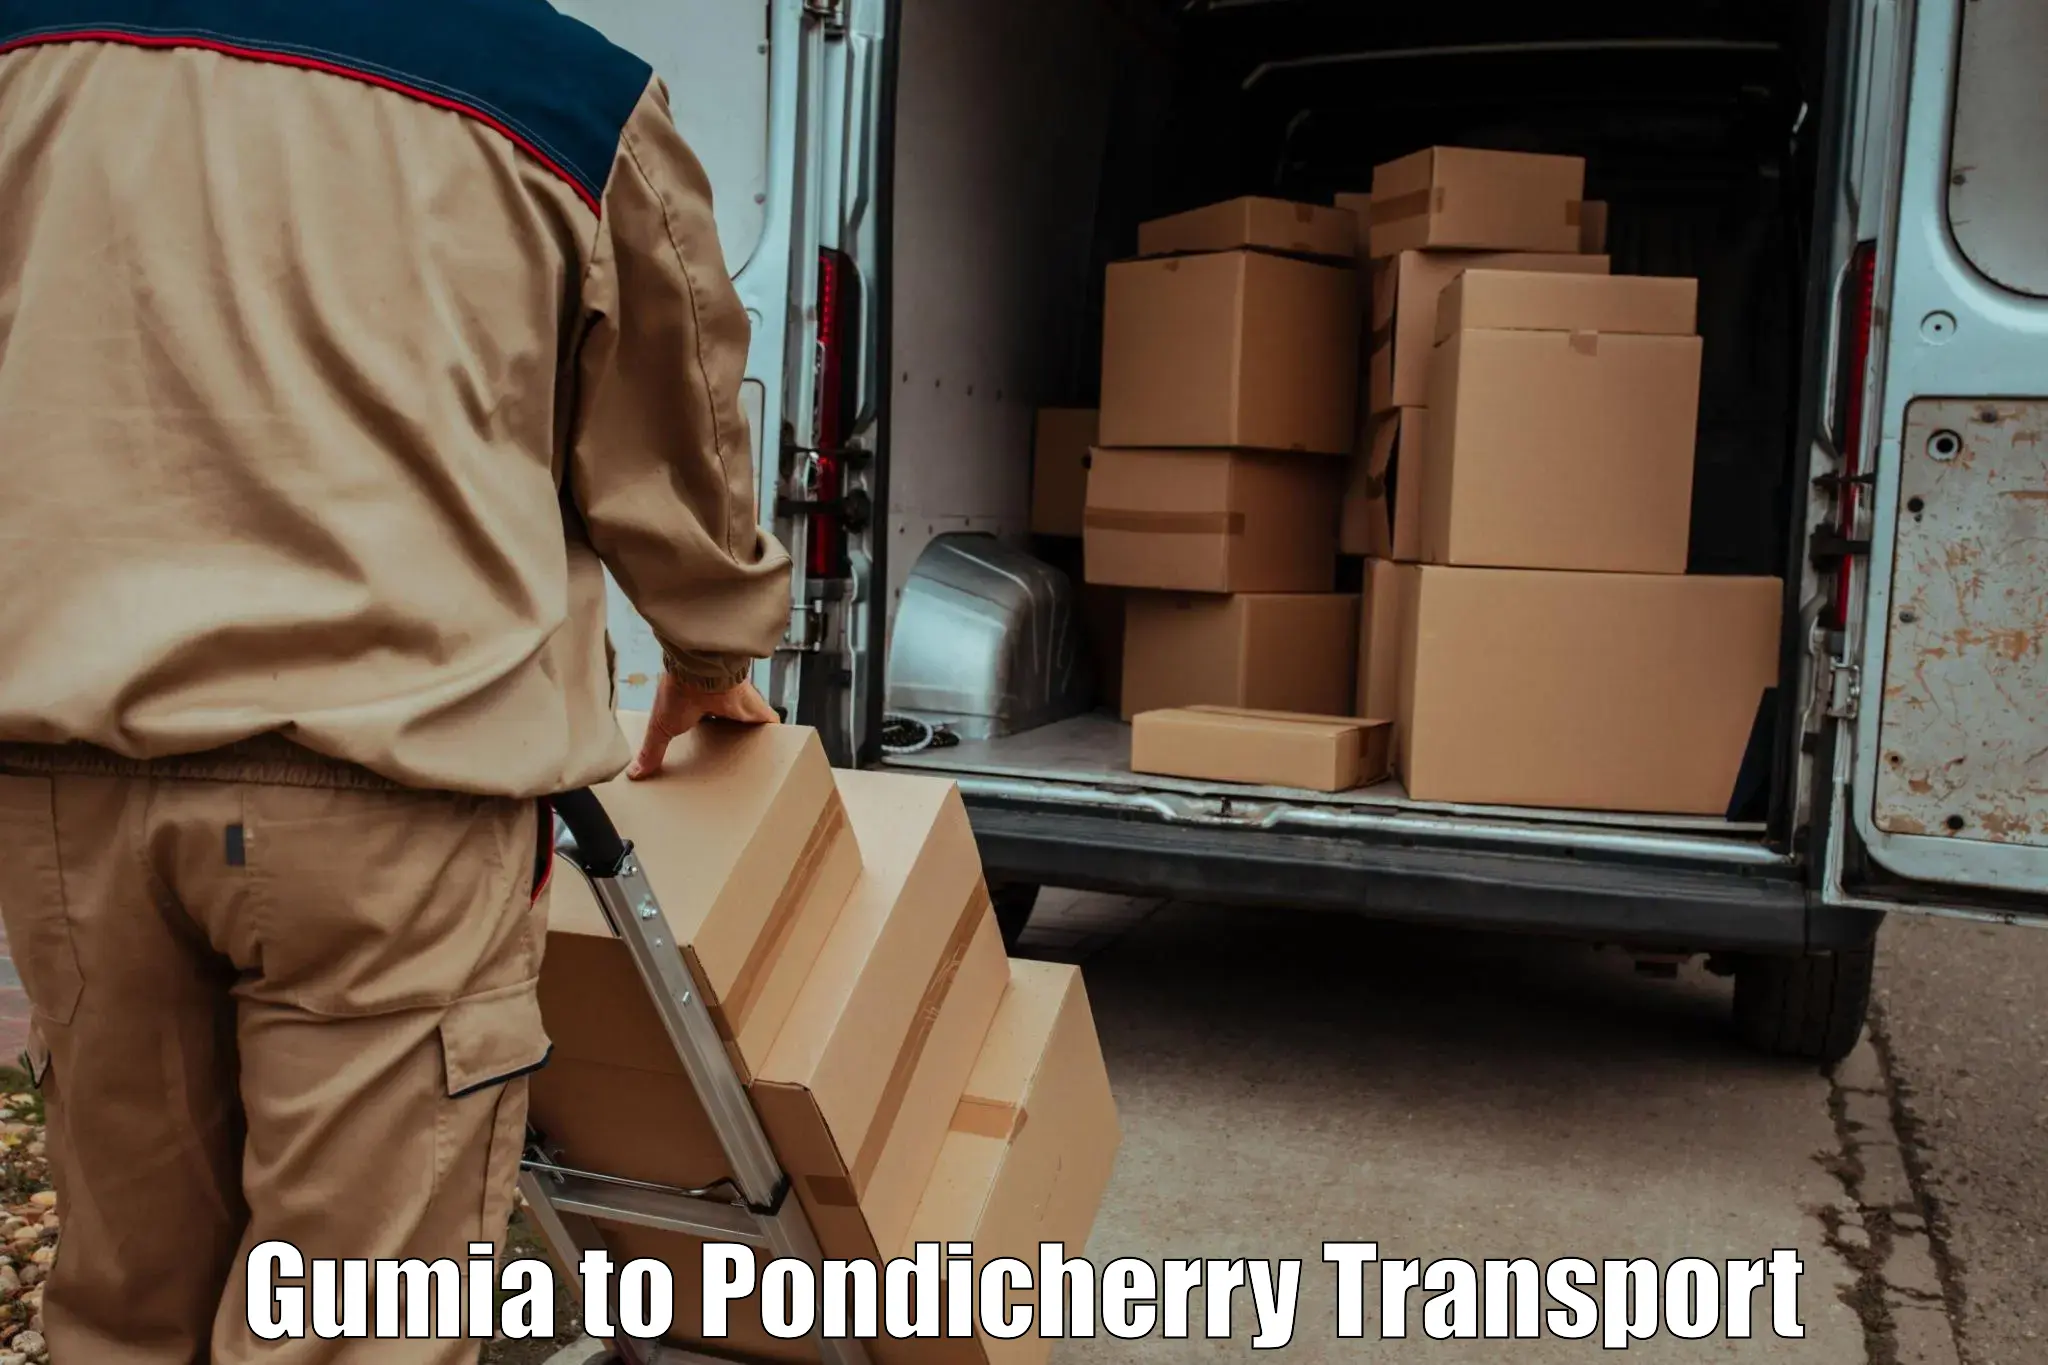 Pick up transport service Gumia to Pondicherry